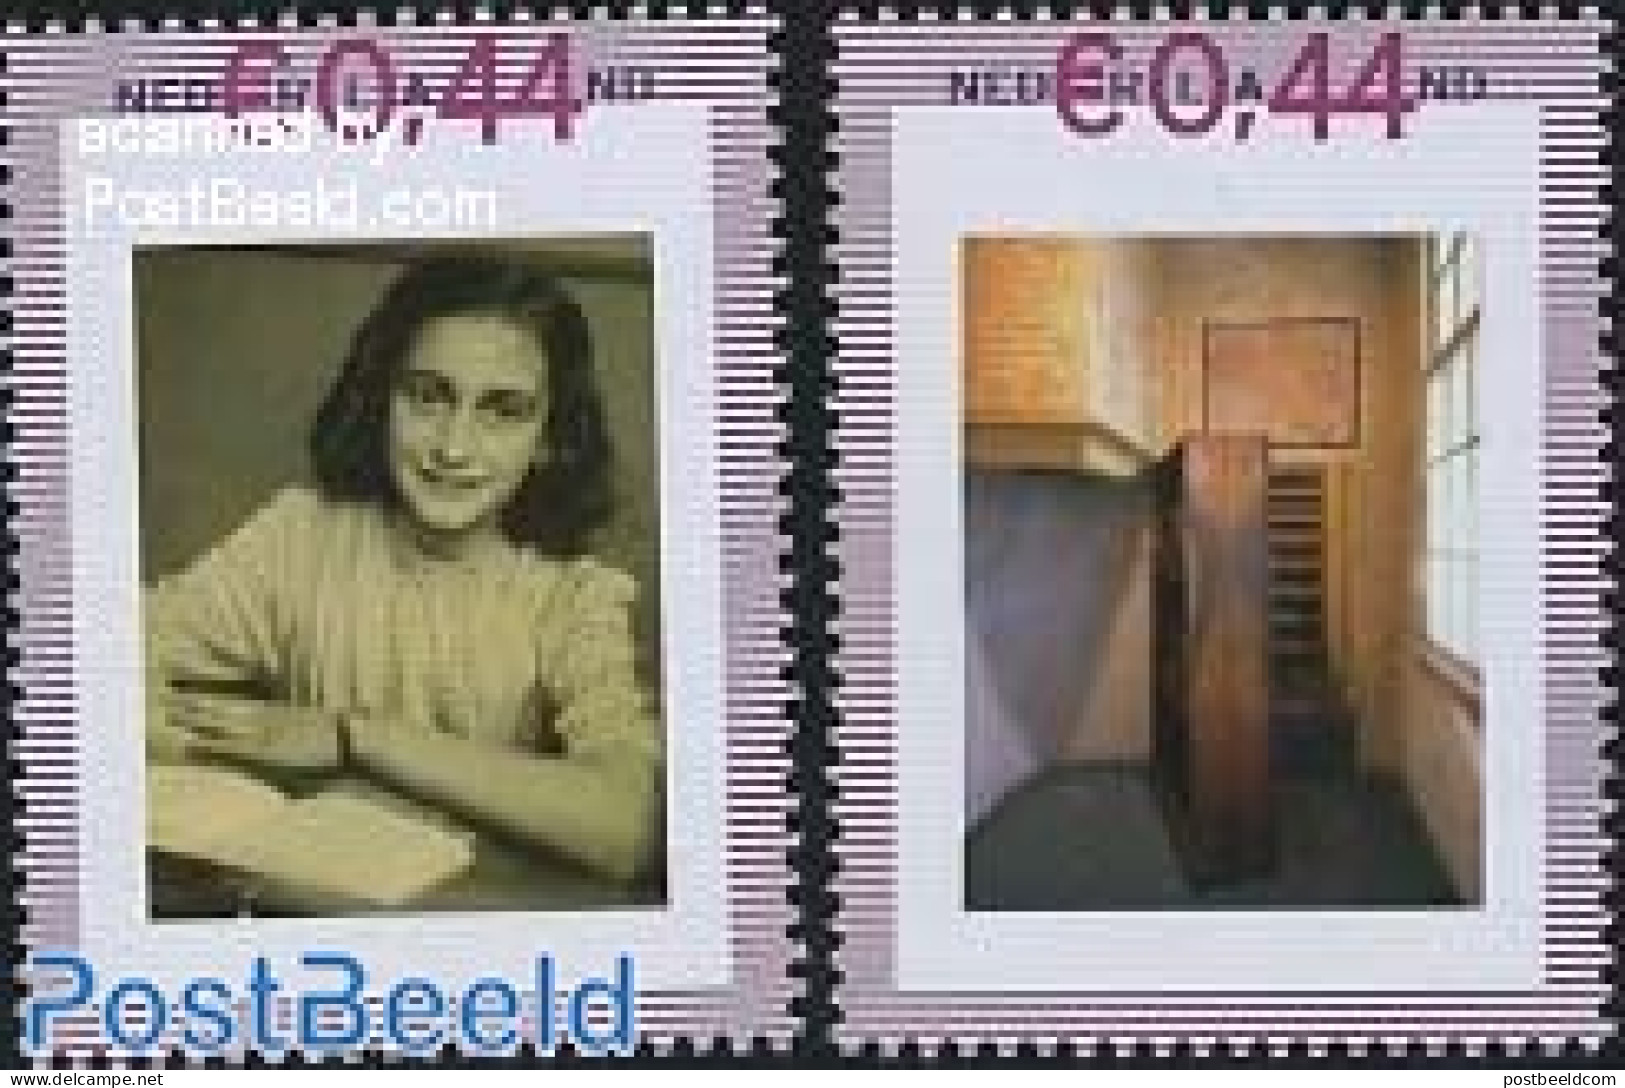 Netherlands - Personal Stamps TNT/PNL 2007 Anne Frank 2v, Mint NH, History - Religion - World War II - Judaica - WW2 (II Guerra Mundial)